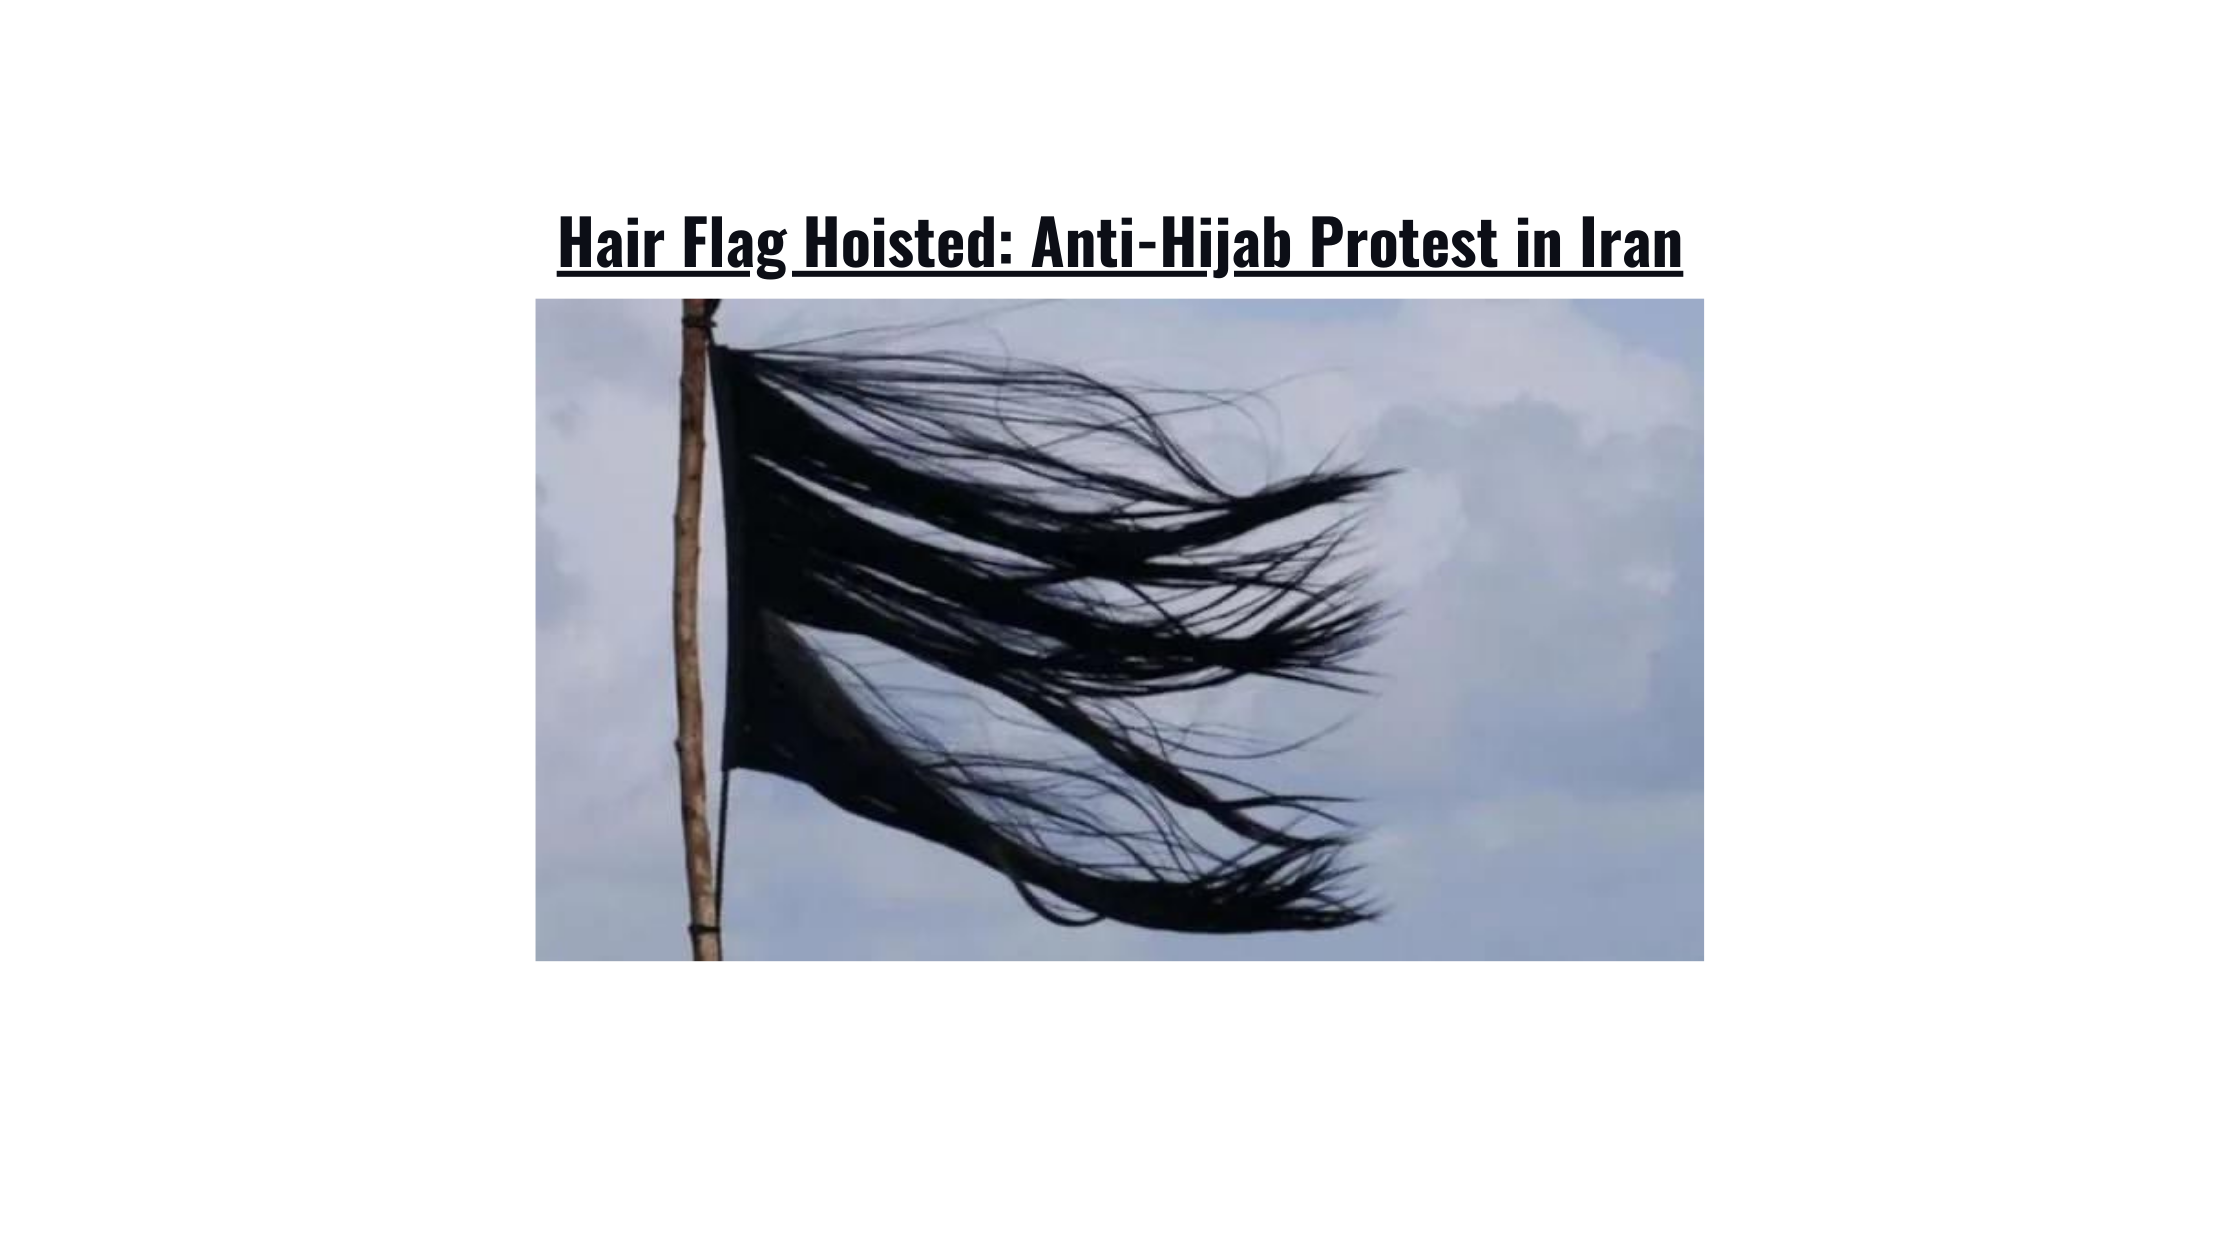 hair flag in anti-hijab protest in iran